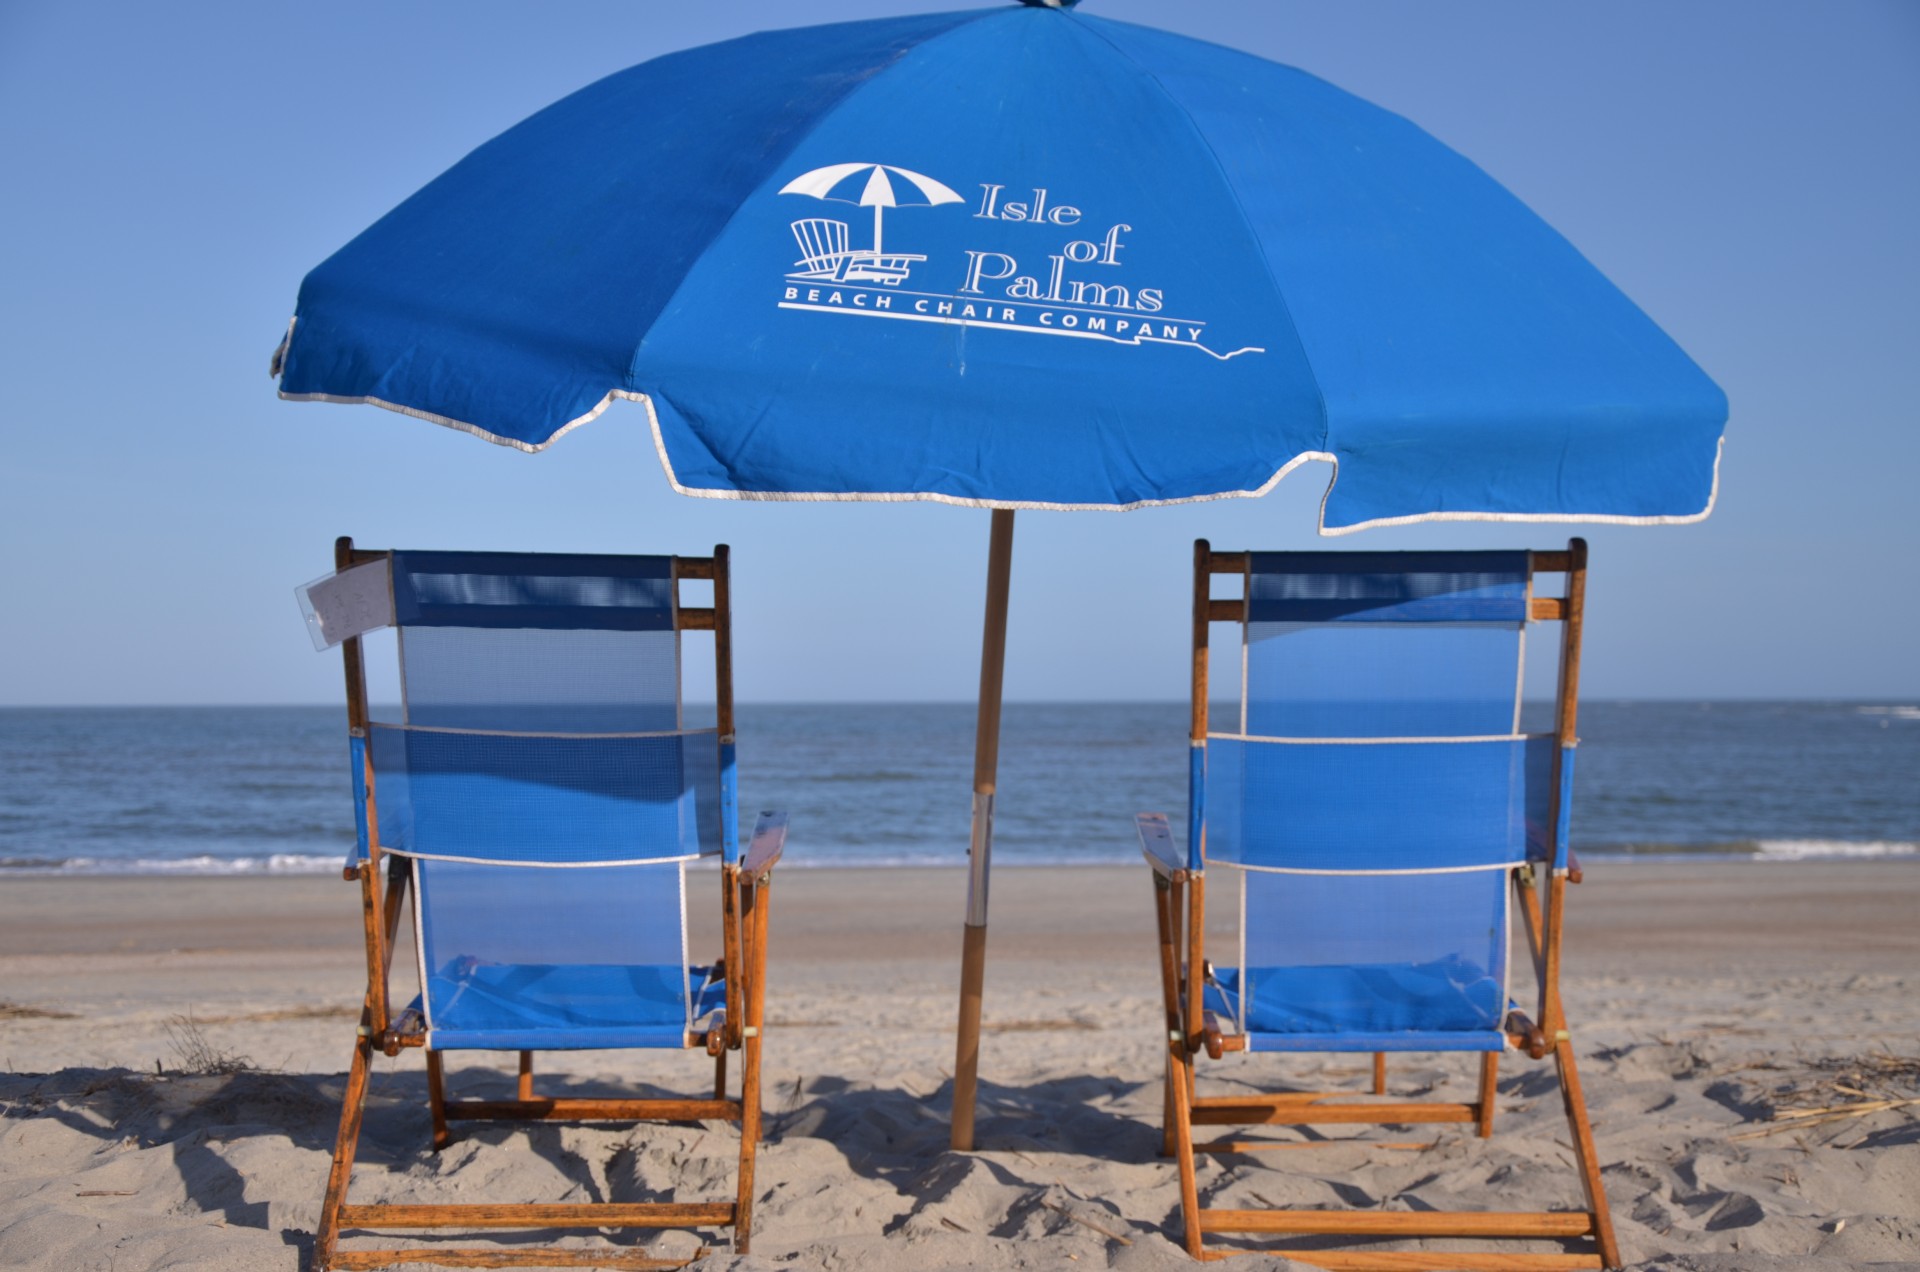 Iop beach chair